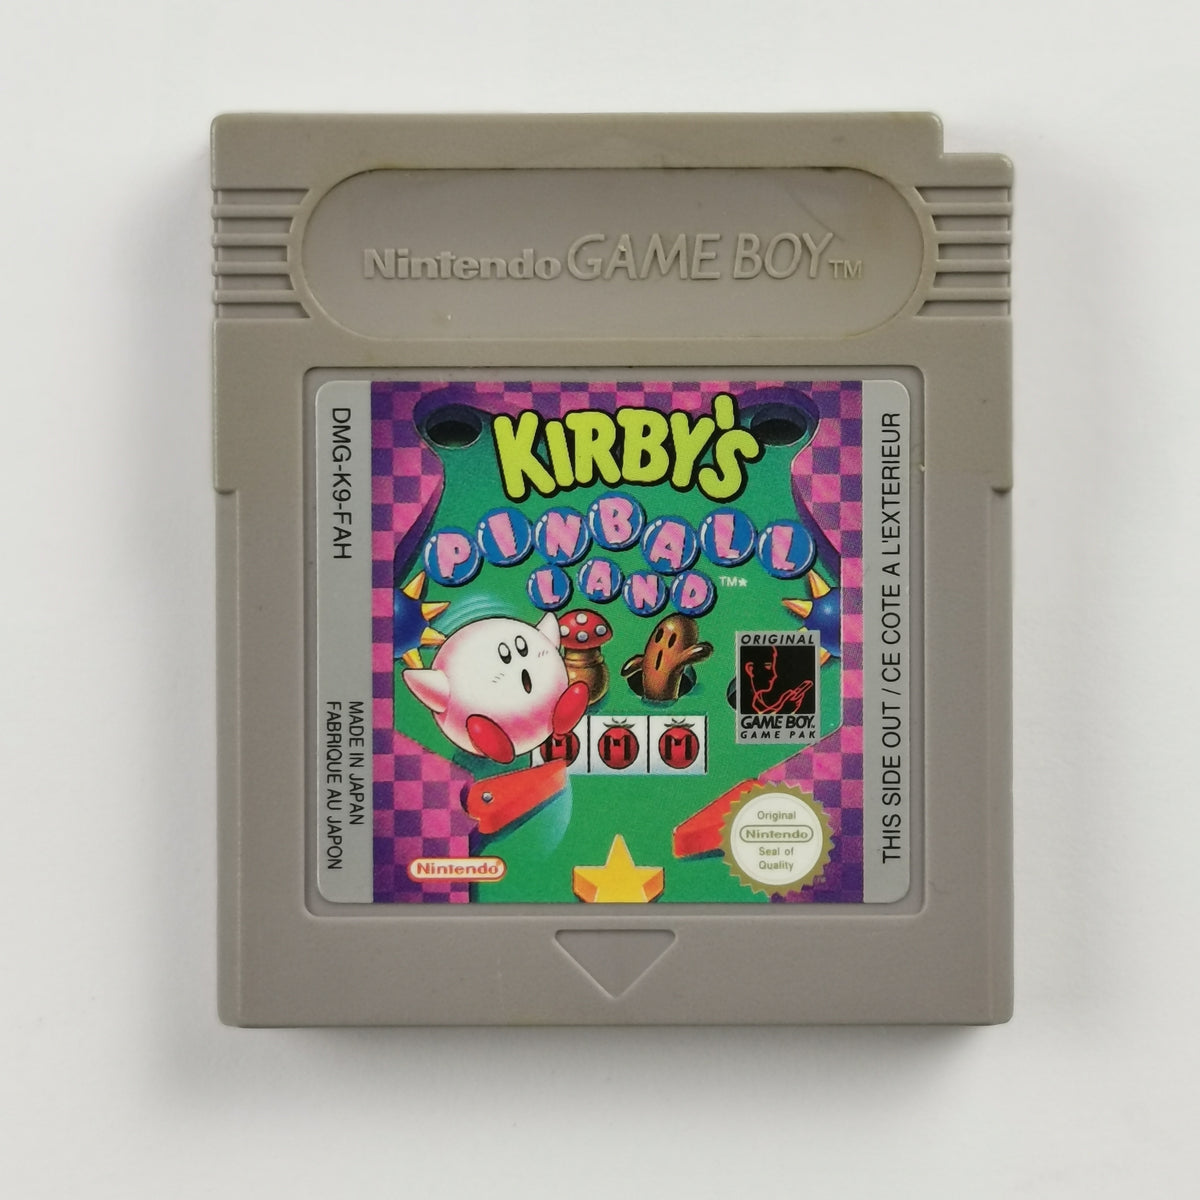 Kirbys Pinball Land Game Boy [GB]